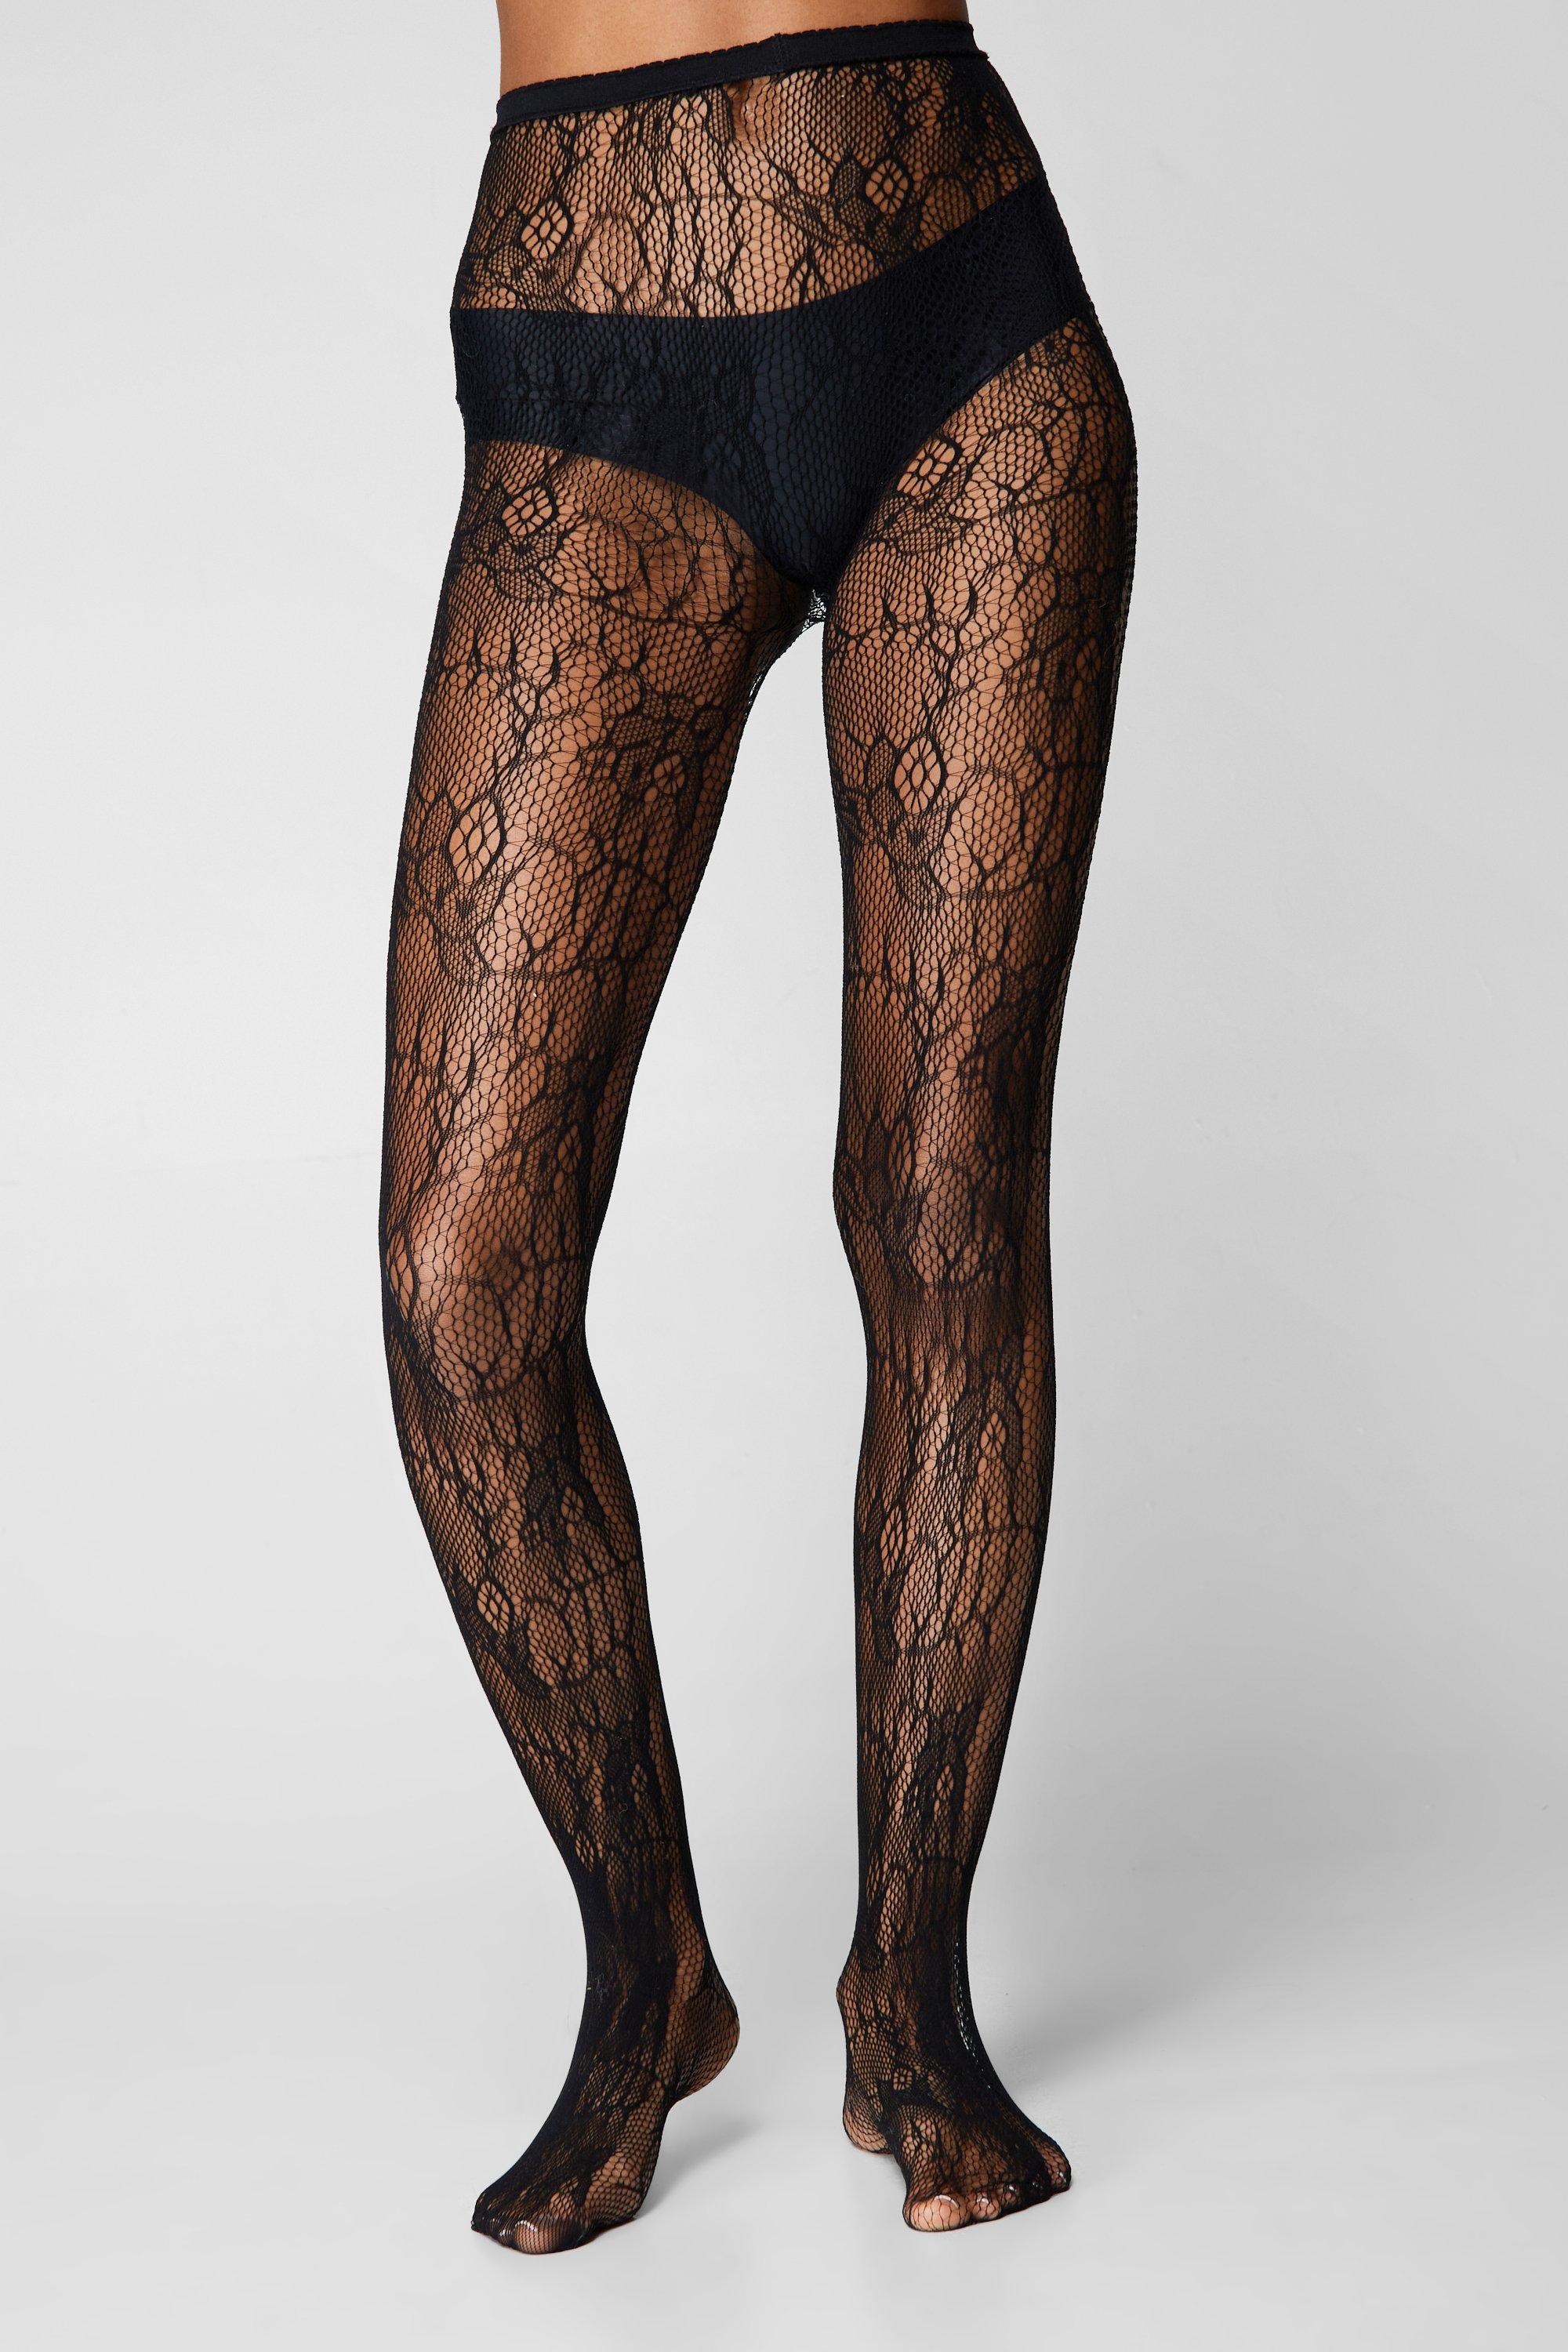 https://media.nastygal.com/i/nastygal/bgg21810_black_xl_1/black-floral-lace-fishnet-tights